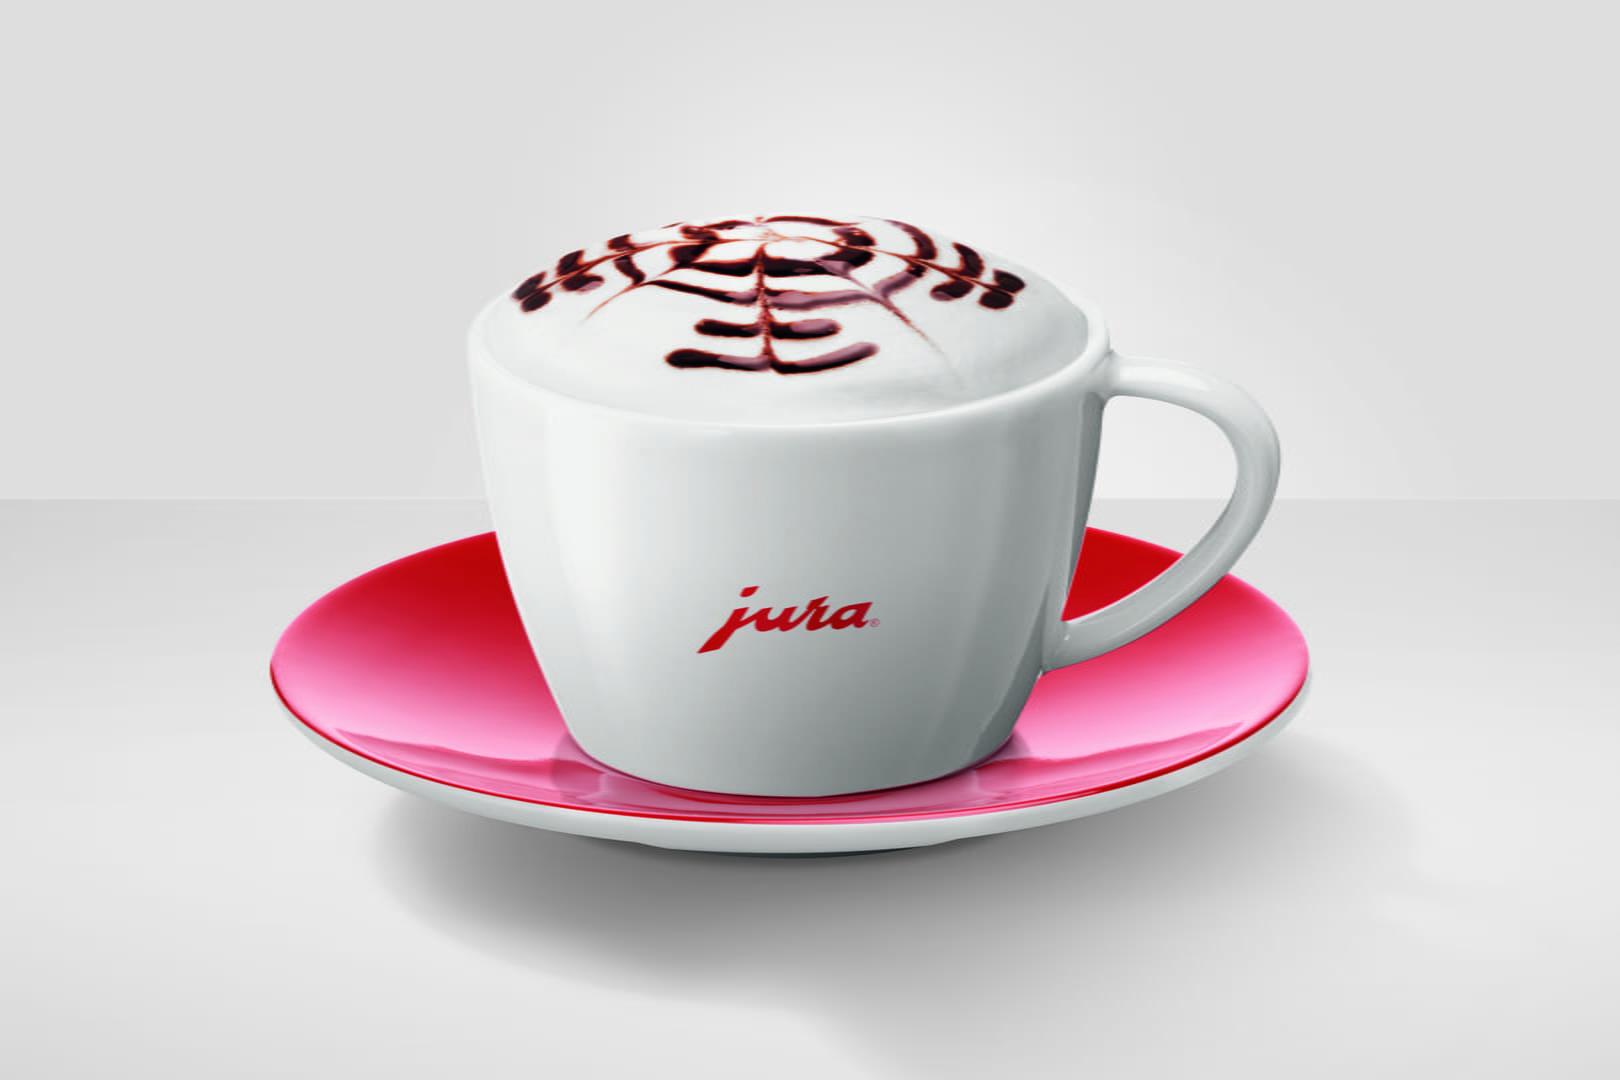 Jura Cappuccino Cups, set of 2 for Jura coffee machines